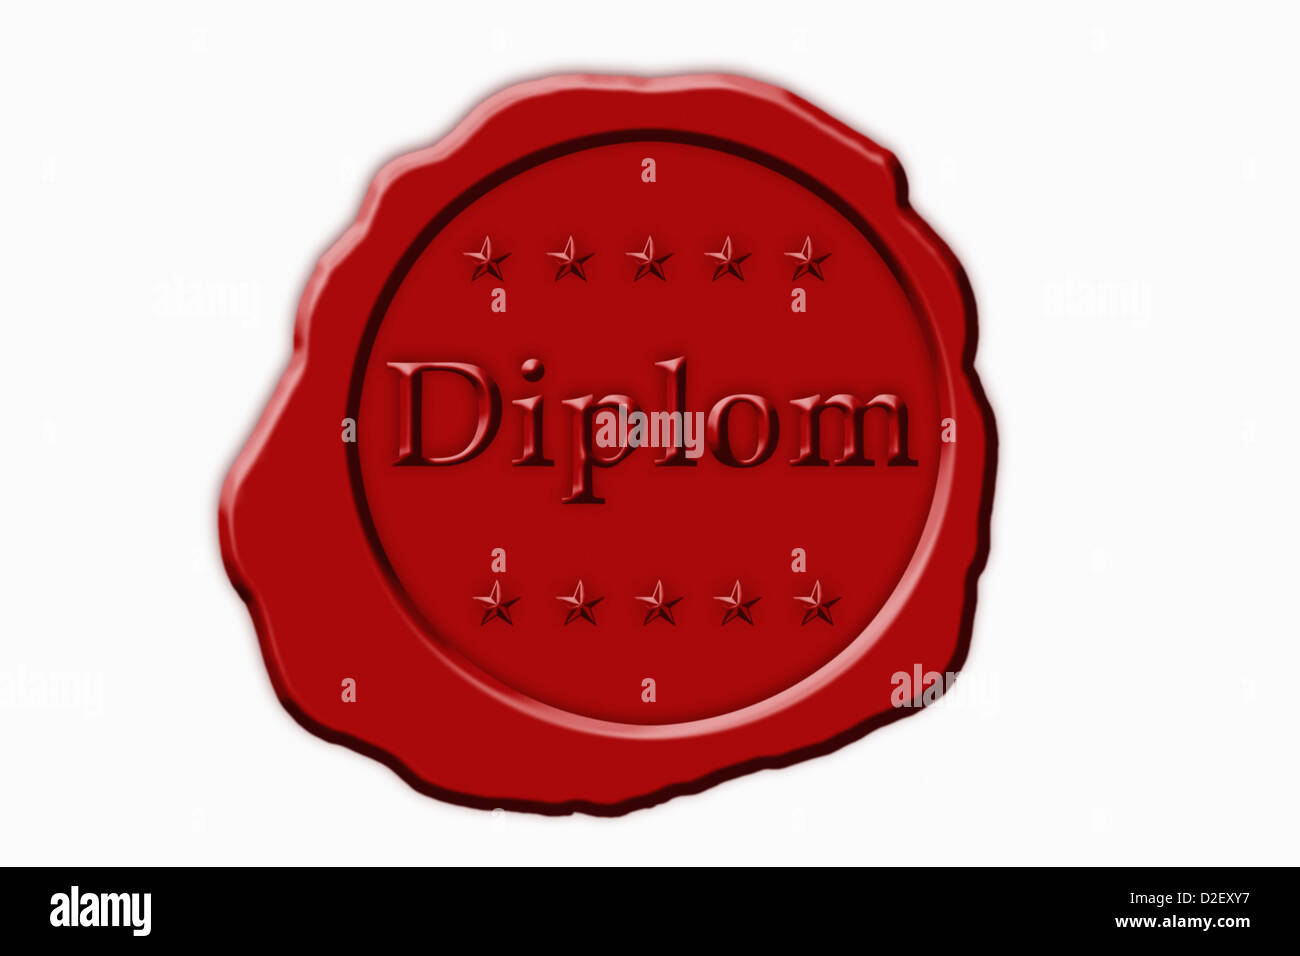 Detailansicht eines roten Siegels mit der Aufschrift Diplom | Dettaglio foto di un sigillo rosso con il tedesco diploma di iscrizione Foto Stock